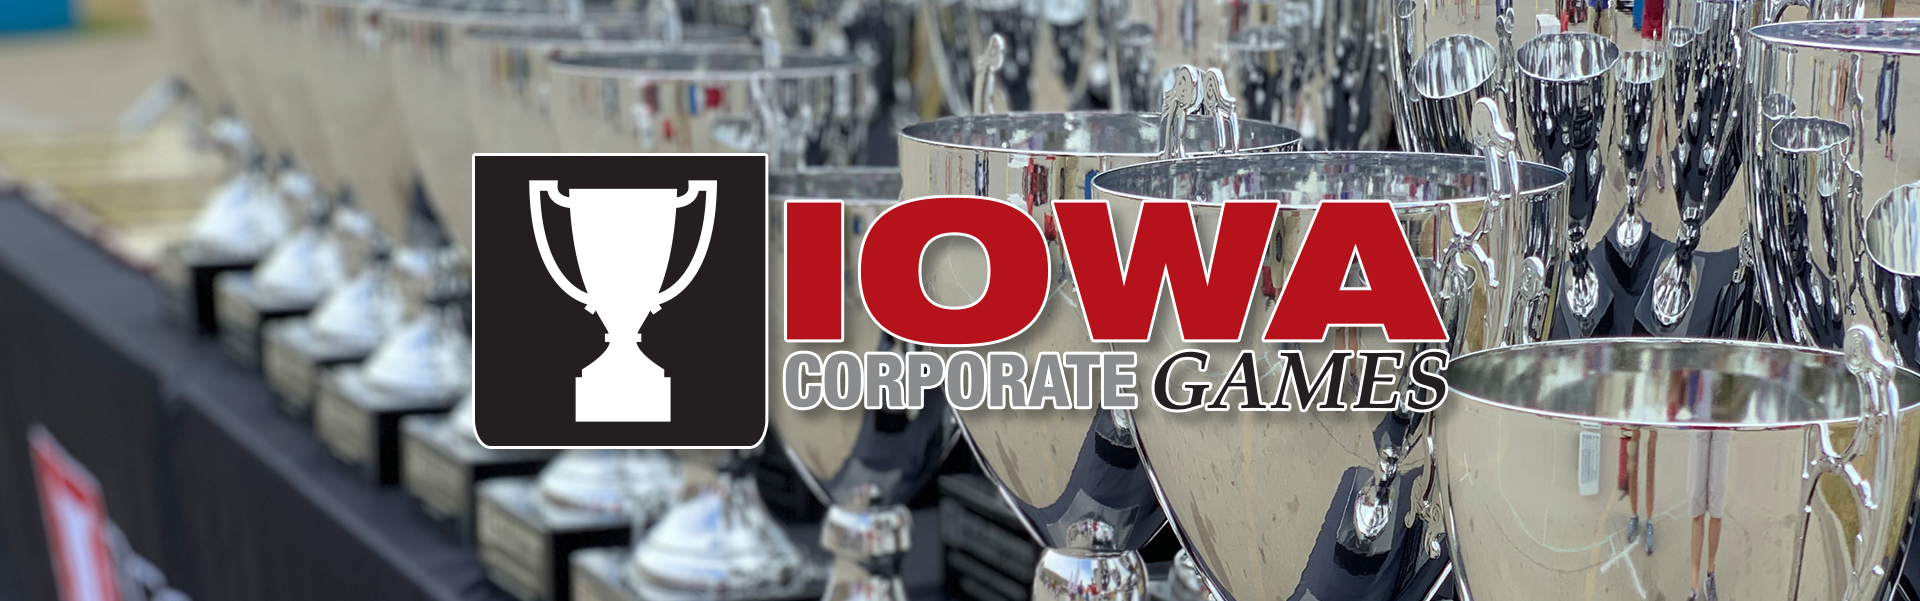 Iowa Corporate Games